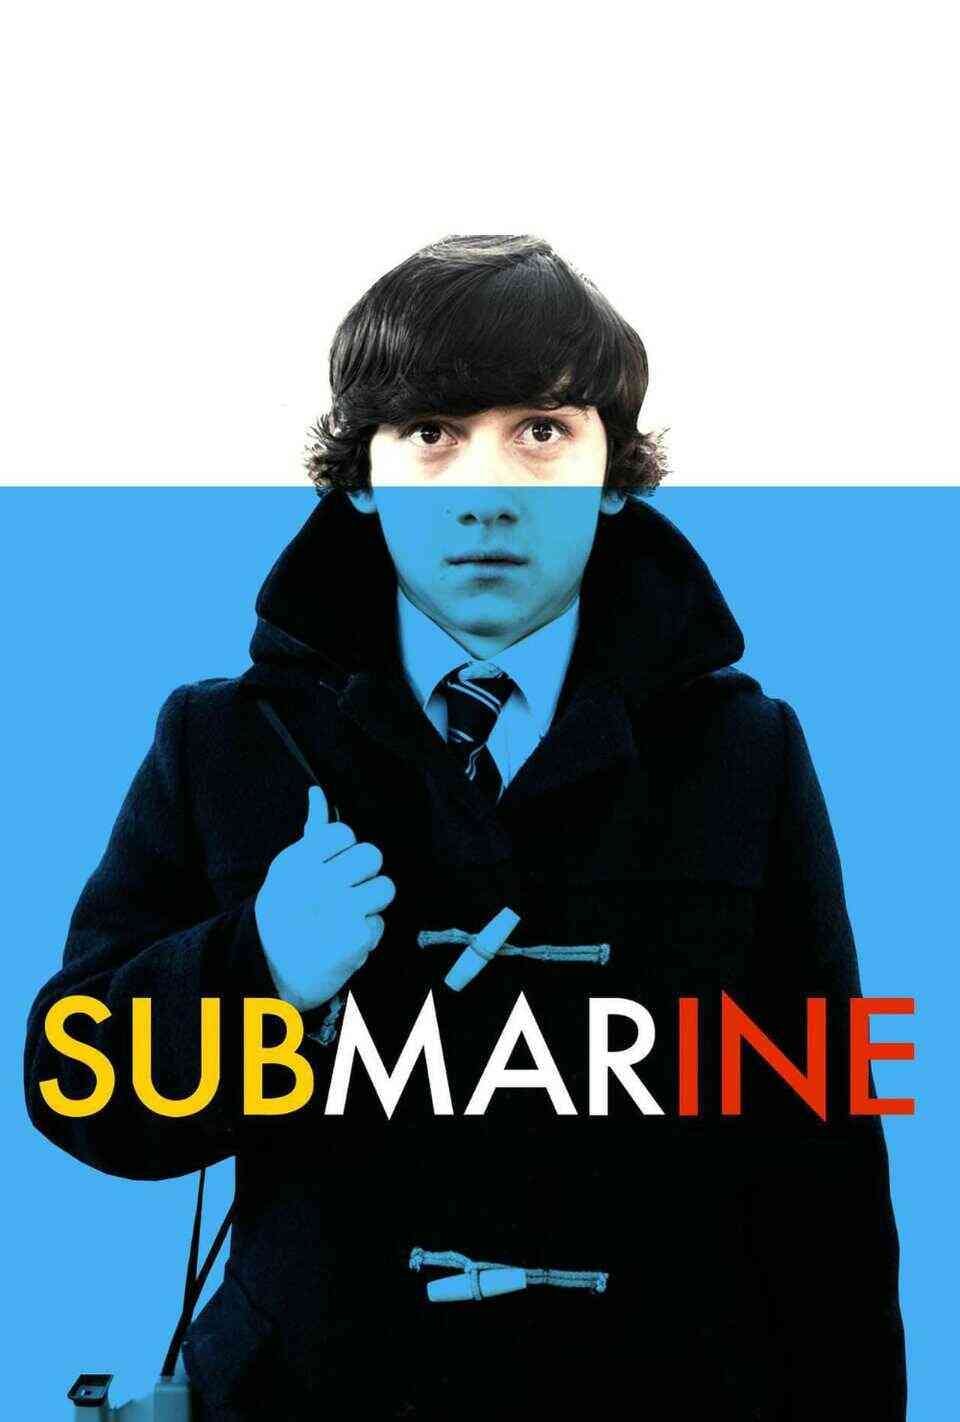 Read Submarine screenplay (poster)